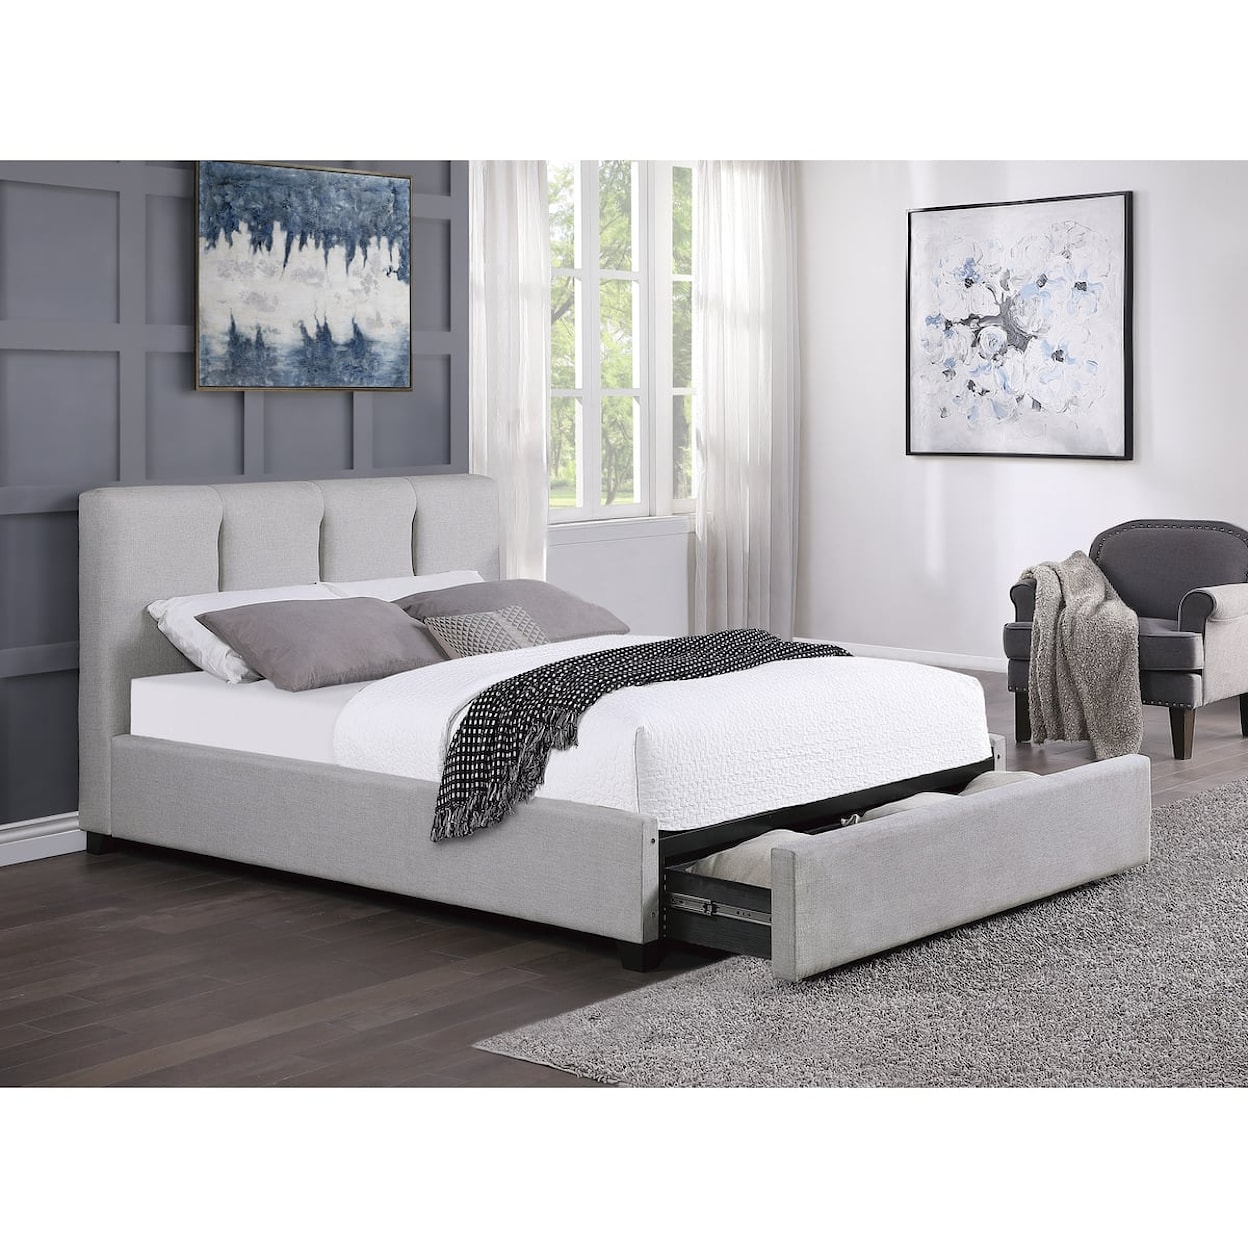 Homelegance Furniture Aitana Cali. King Bed with Footboard Storage